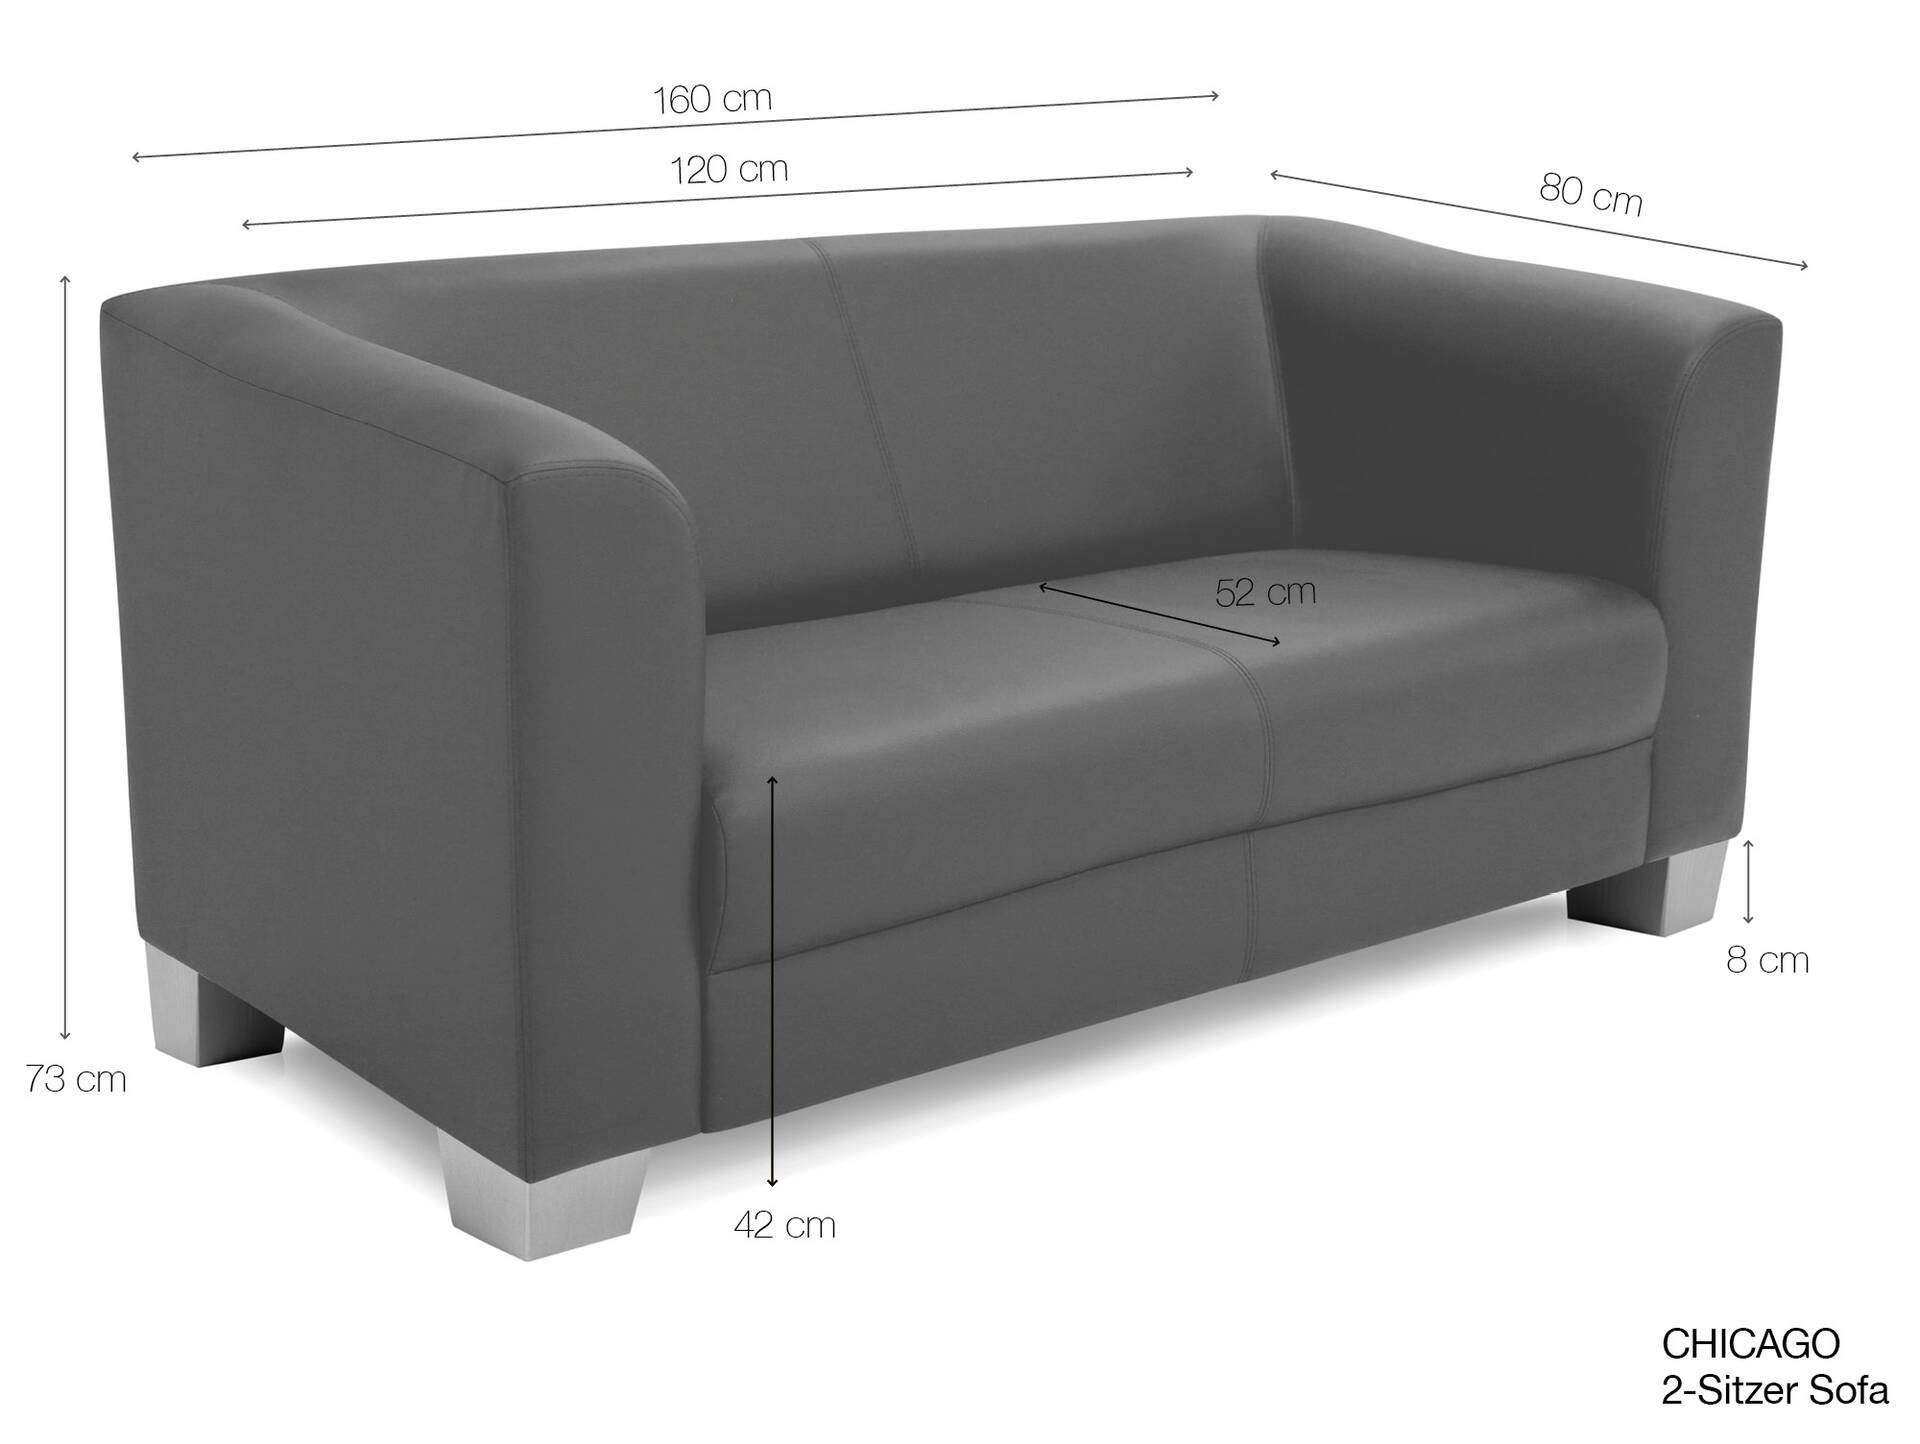 CHICAGO 2-Sitzer Sofa, Material Kunstleder grün